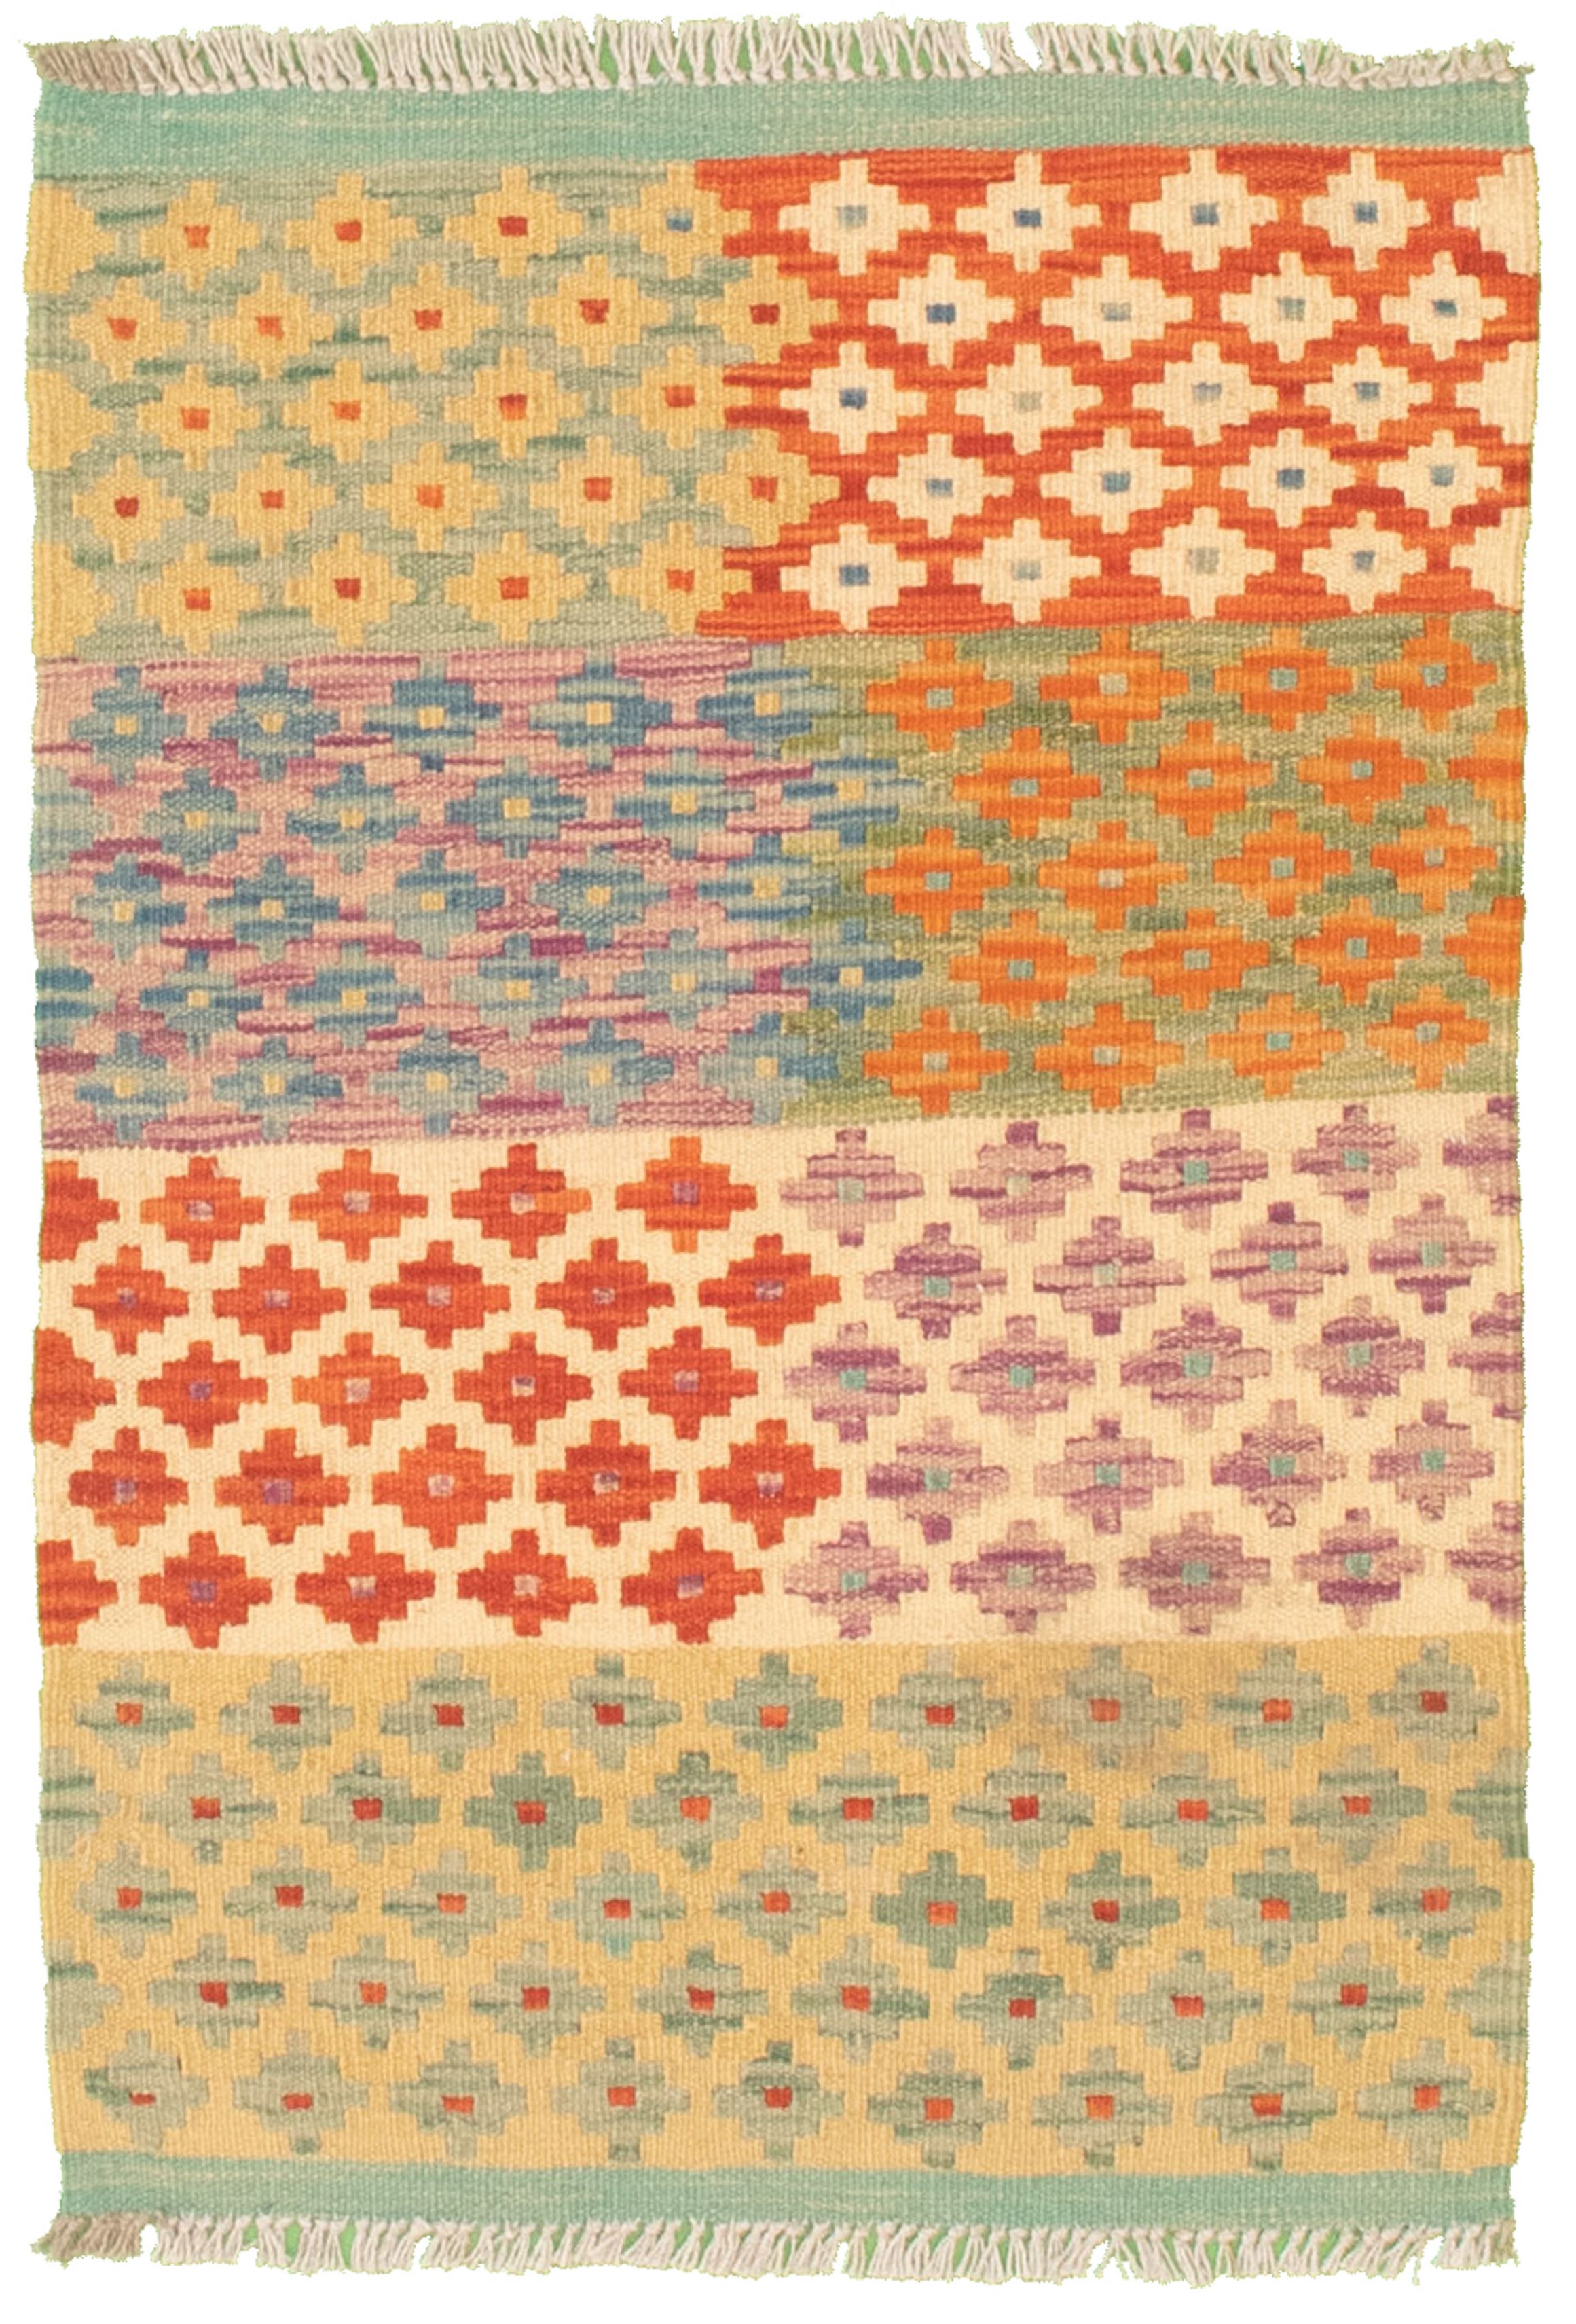 Hand woven Bold and Colorful  Cream Cotton Kilim 2'0" x 3'0" Size: 2'0" x 3'0"  